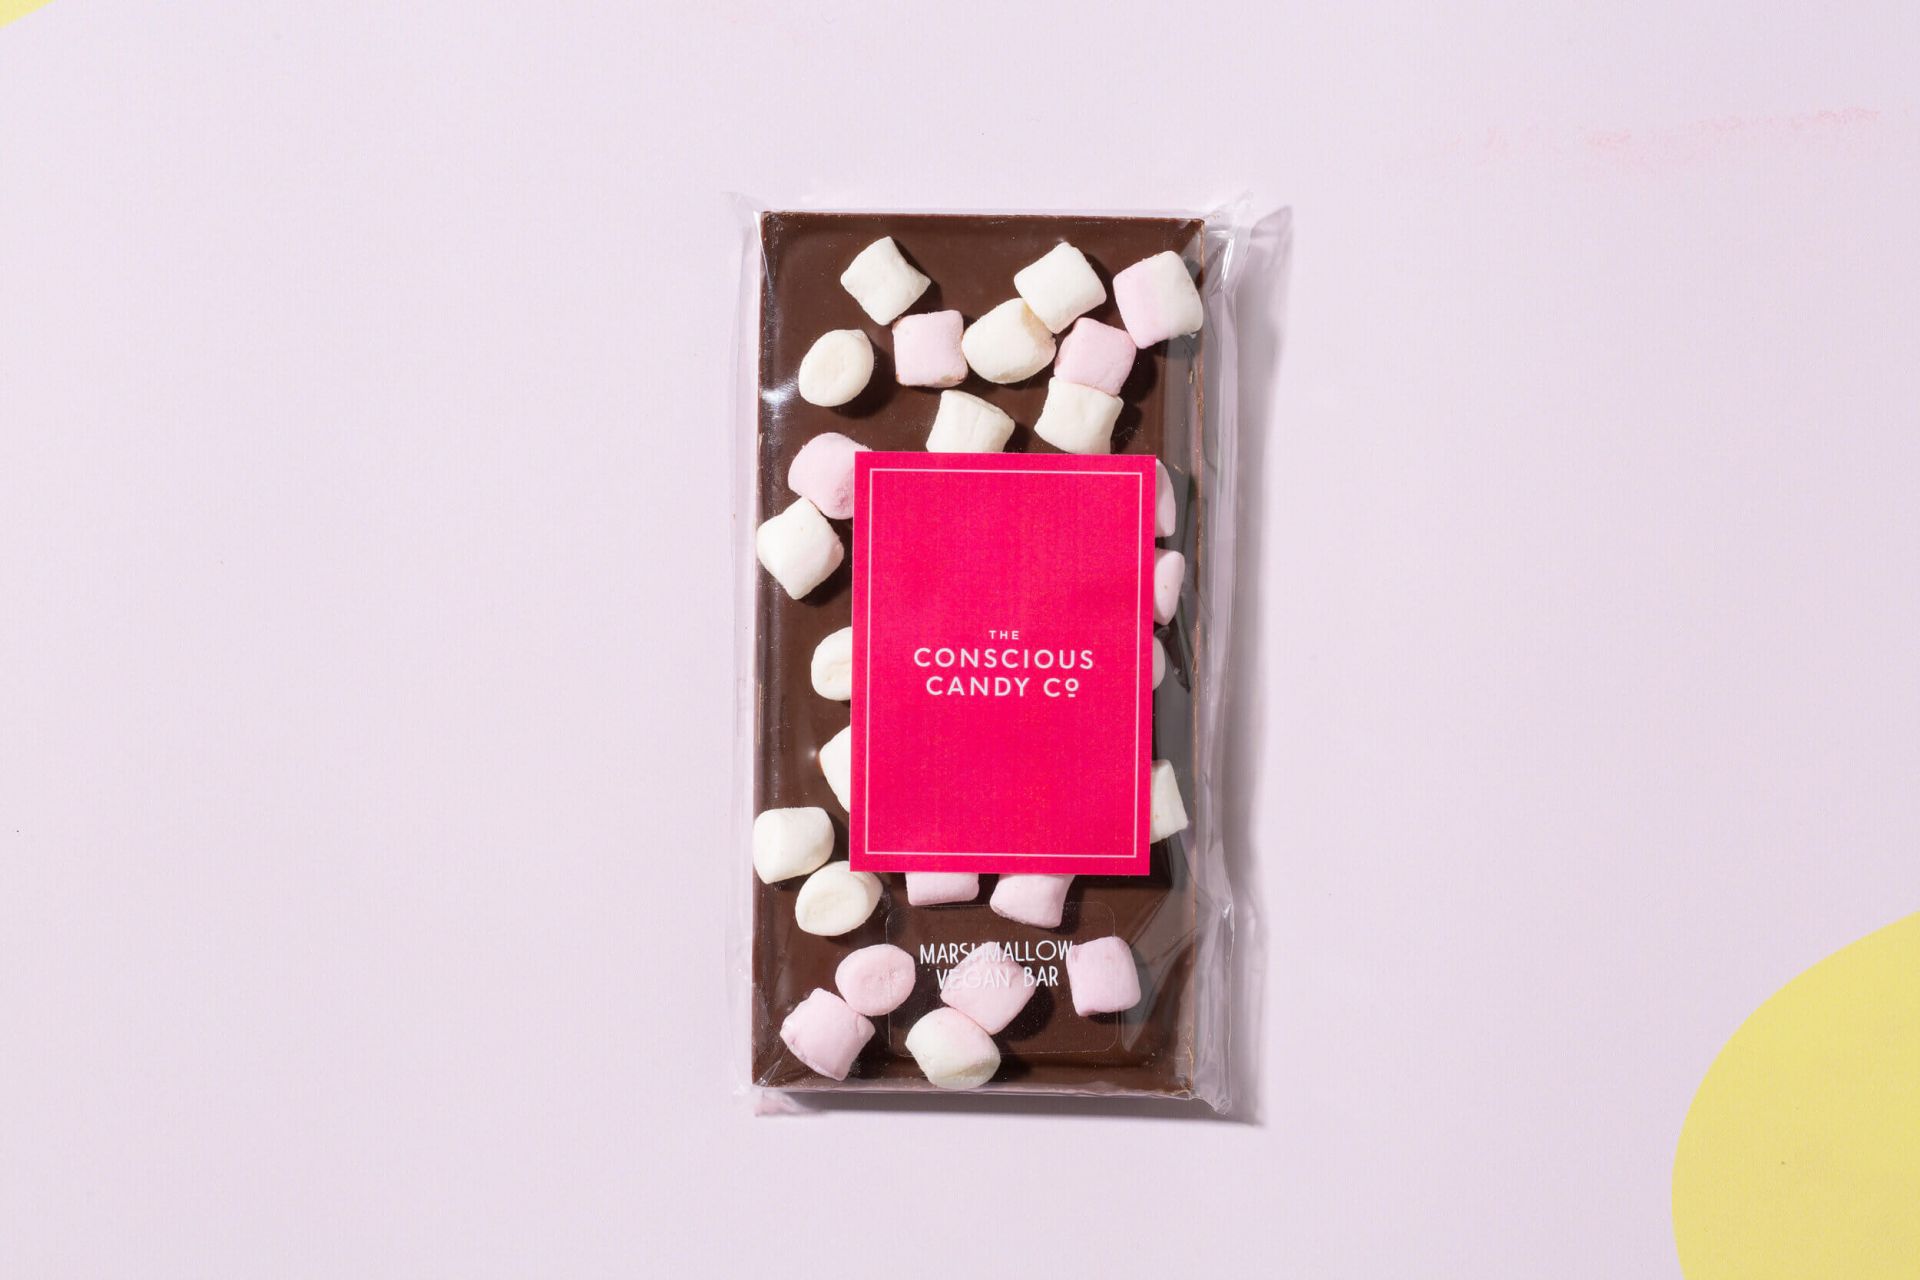 Marshmallow 'Milk' Conscious Candy Chocolate Bar